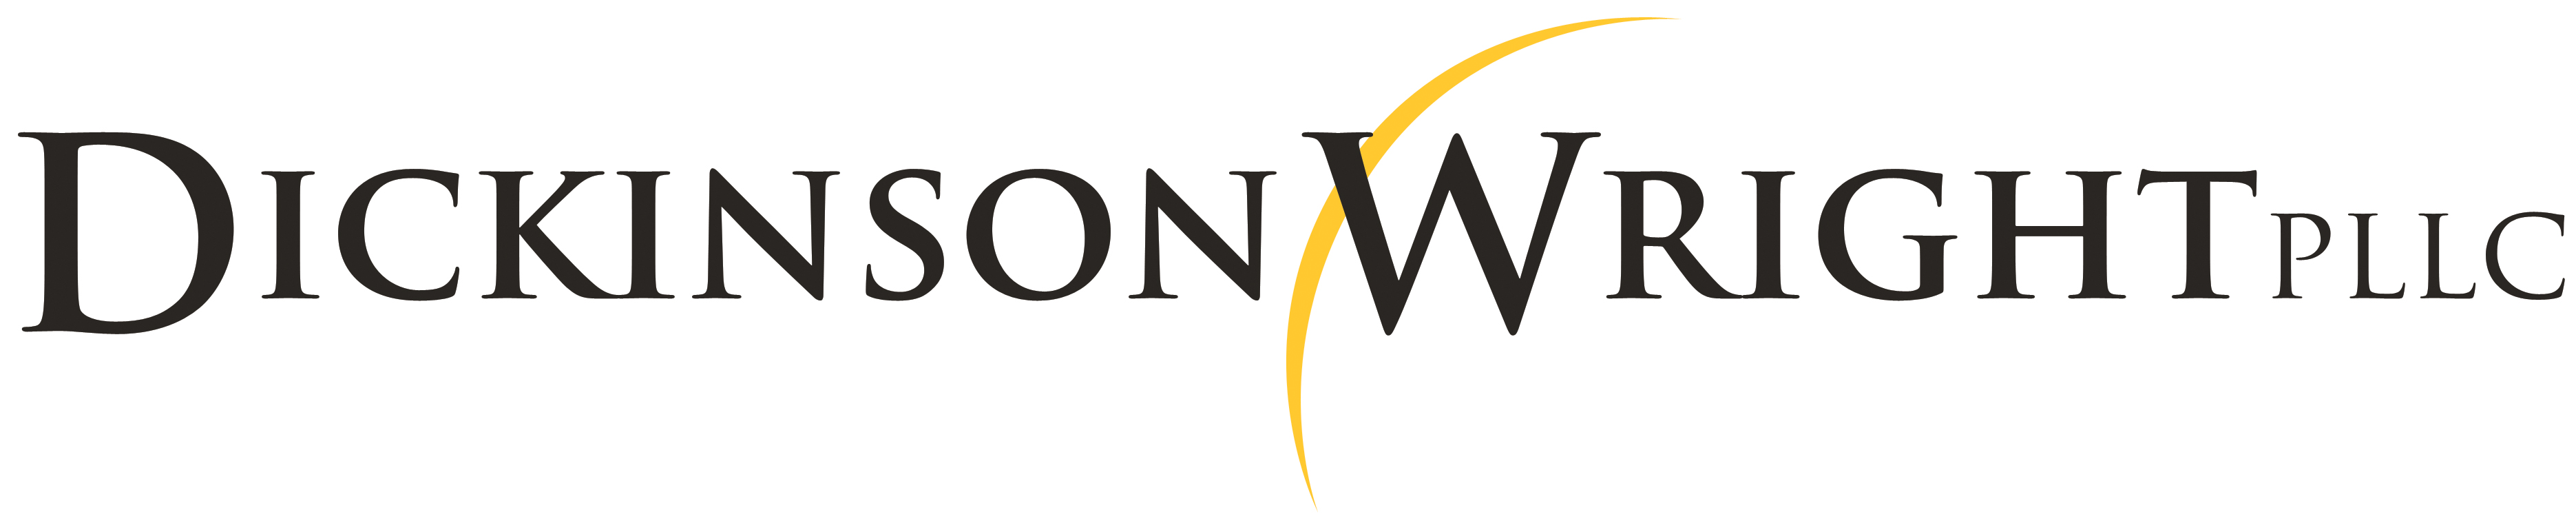 Dickinson Wright logo (Hi-resolution)